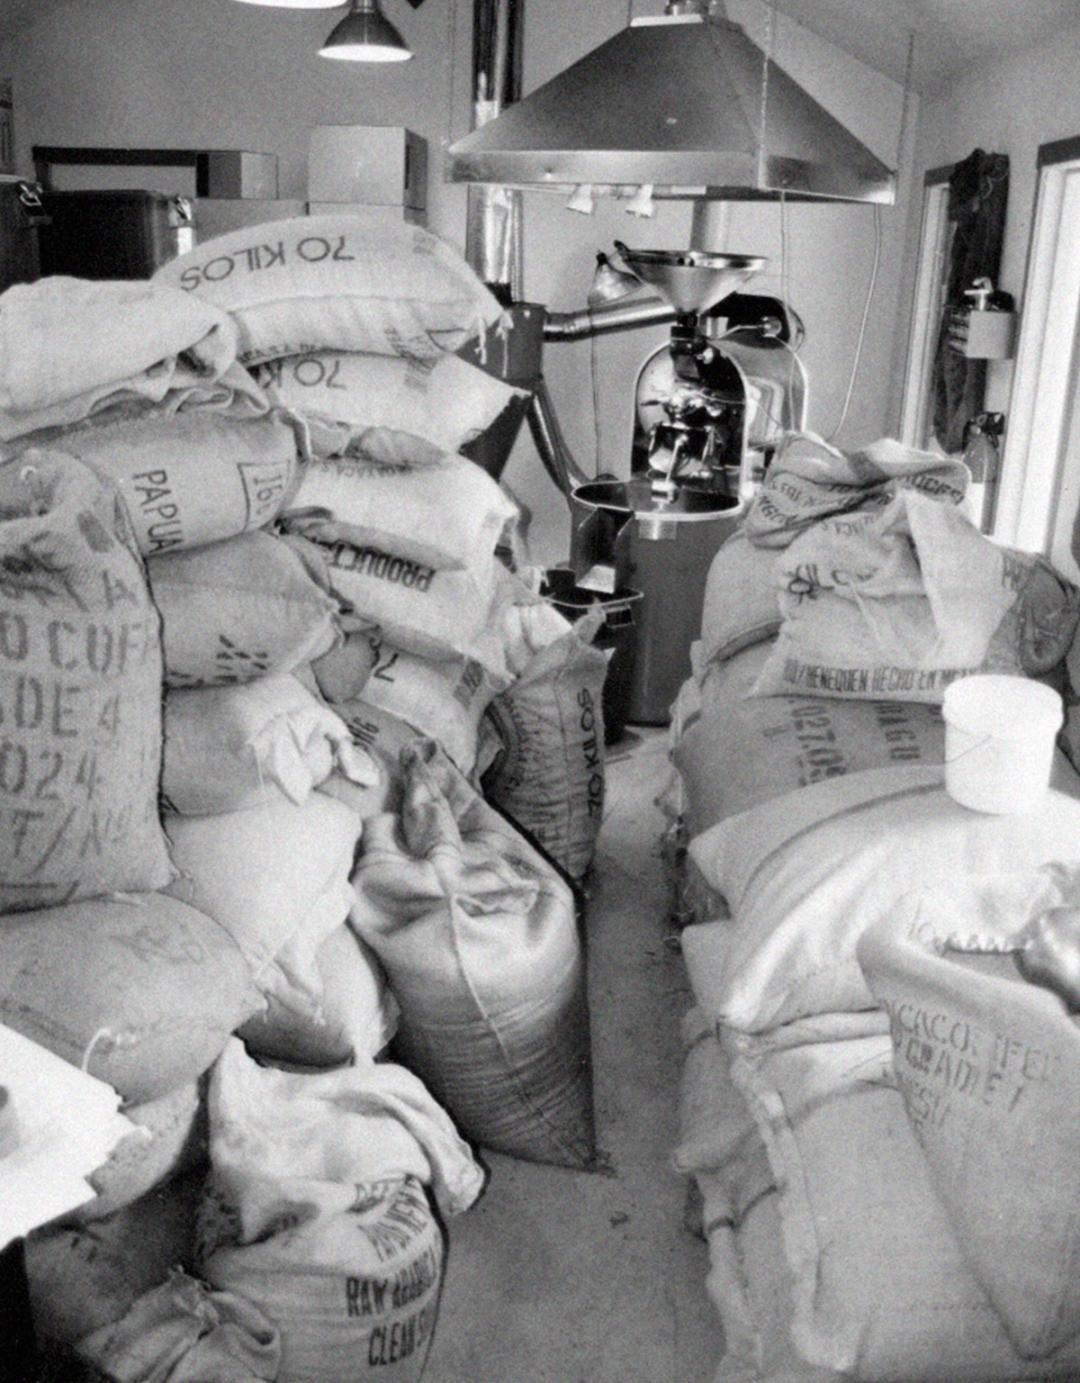 Large sacks of coffee